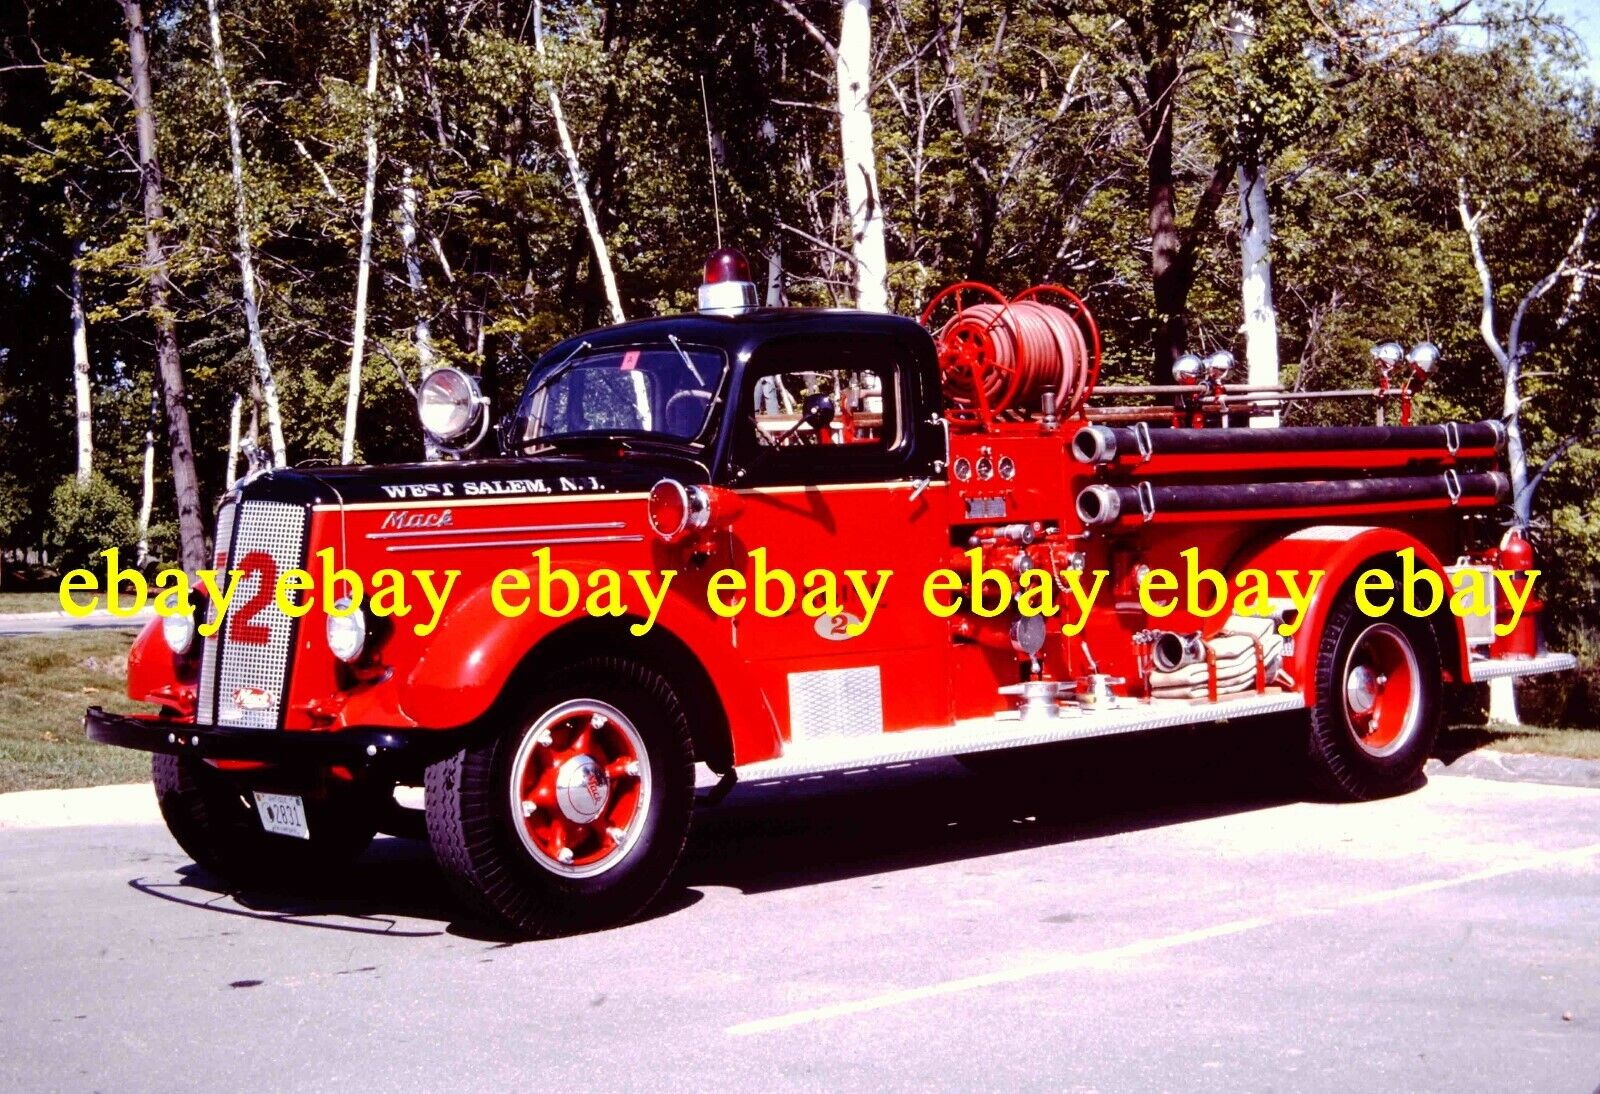 Fire Apparatus Slide West Salem New Jersey Fire Dept 1947 Mack Pumper NJ58